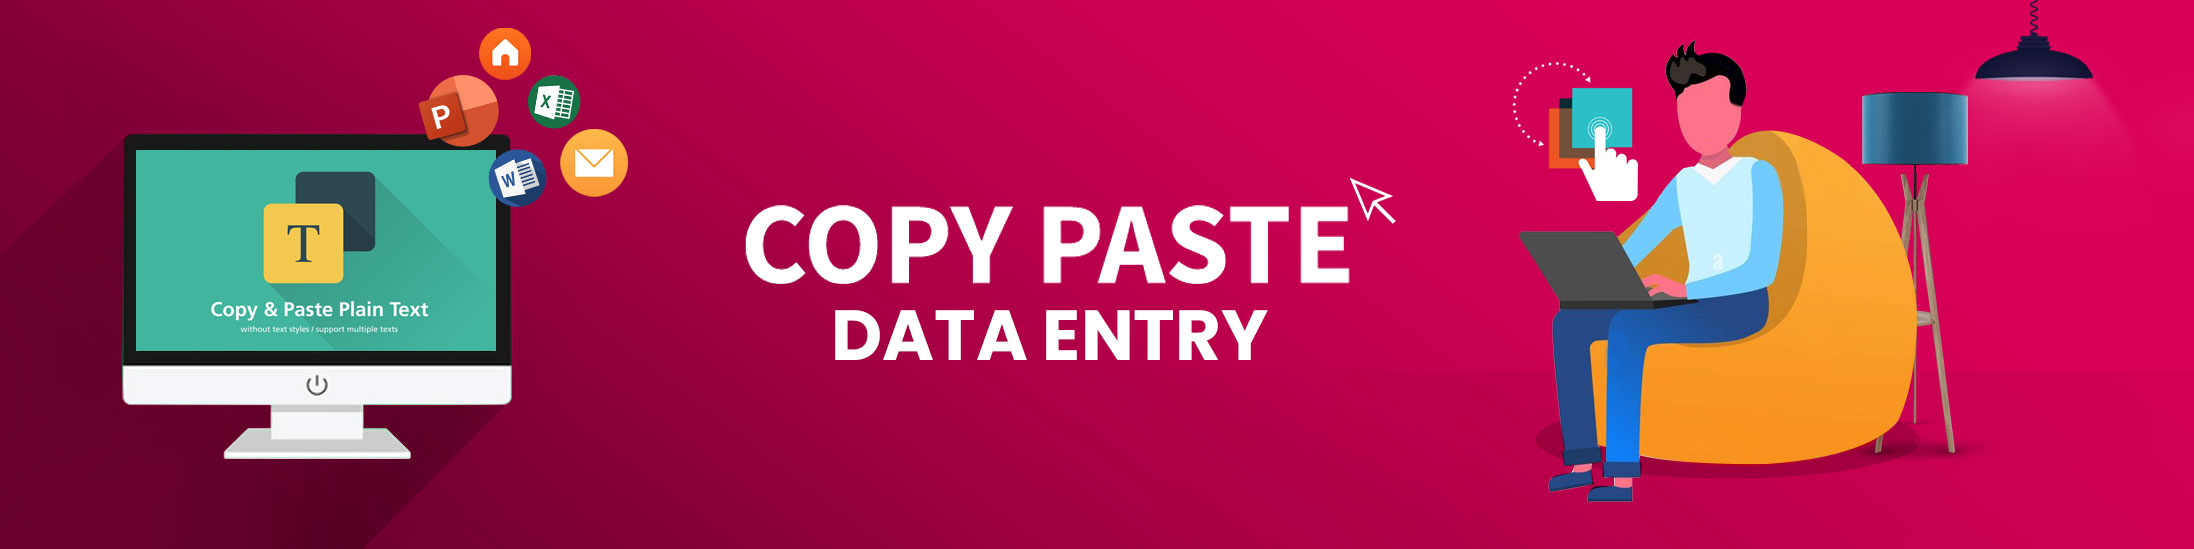 Copy Paste Data Entry Service